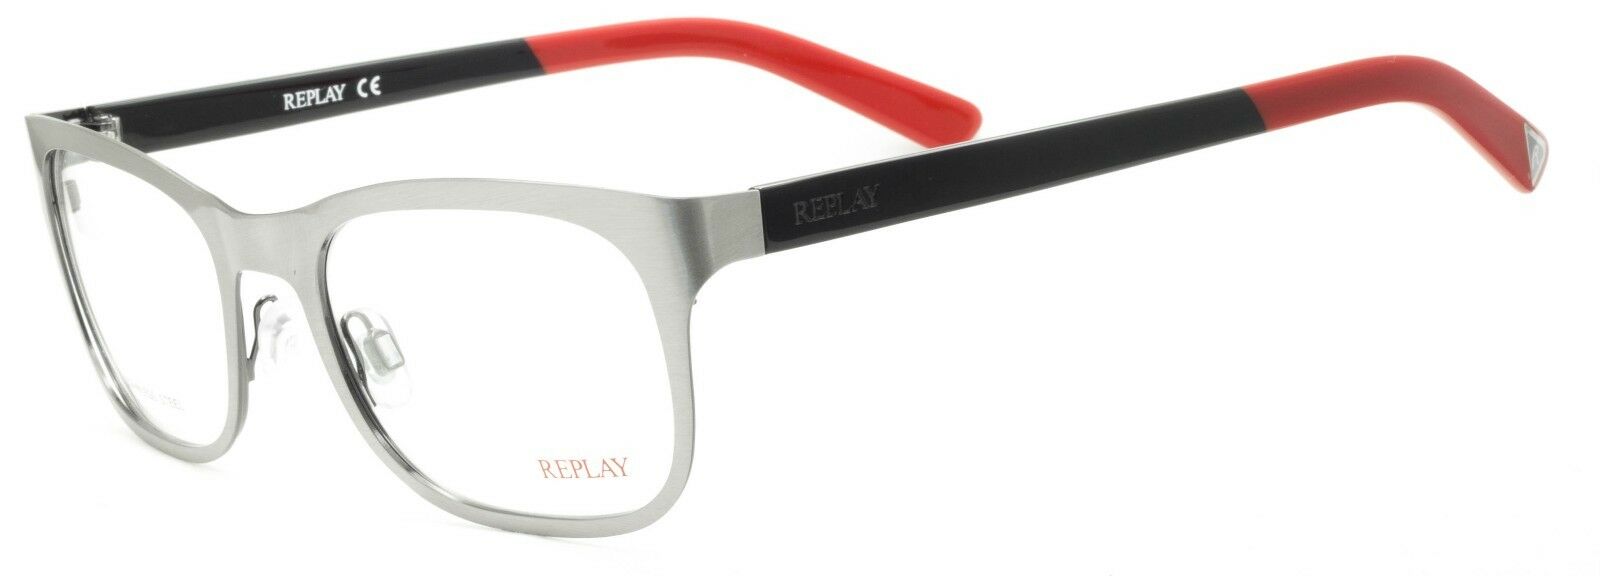 REPLAY RY059V01 FRAMES Glasses RX Optical Eyewear Eyeglasses New BNIB - TRUSTED